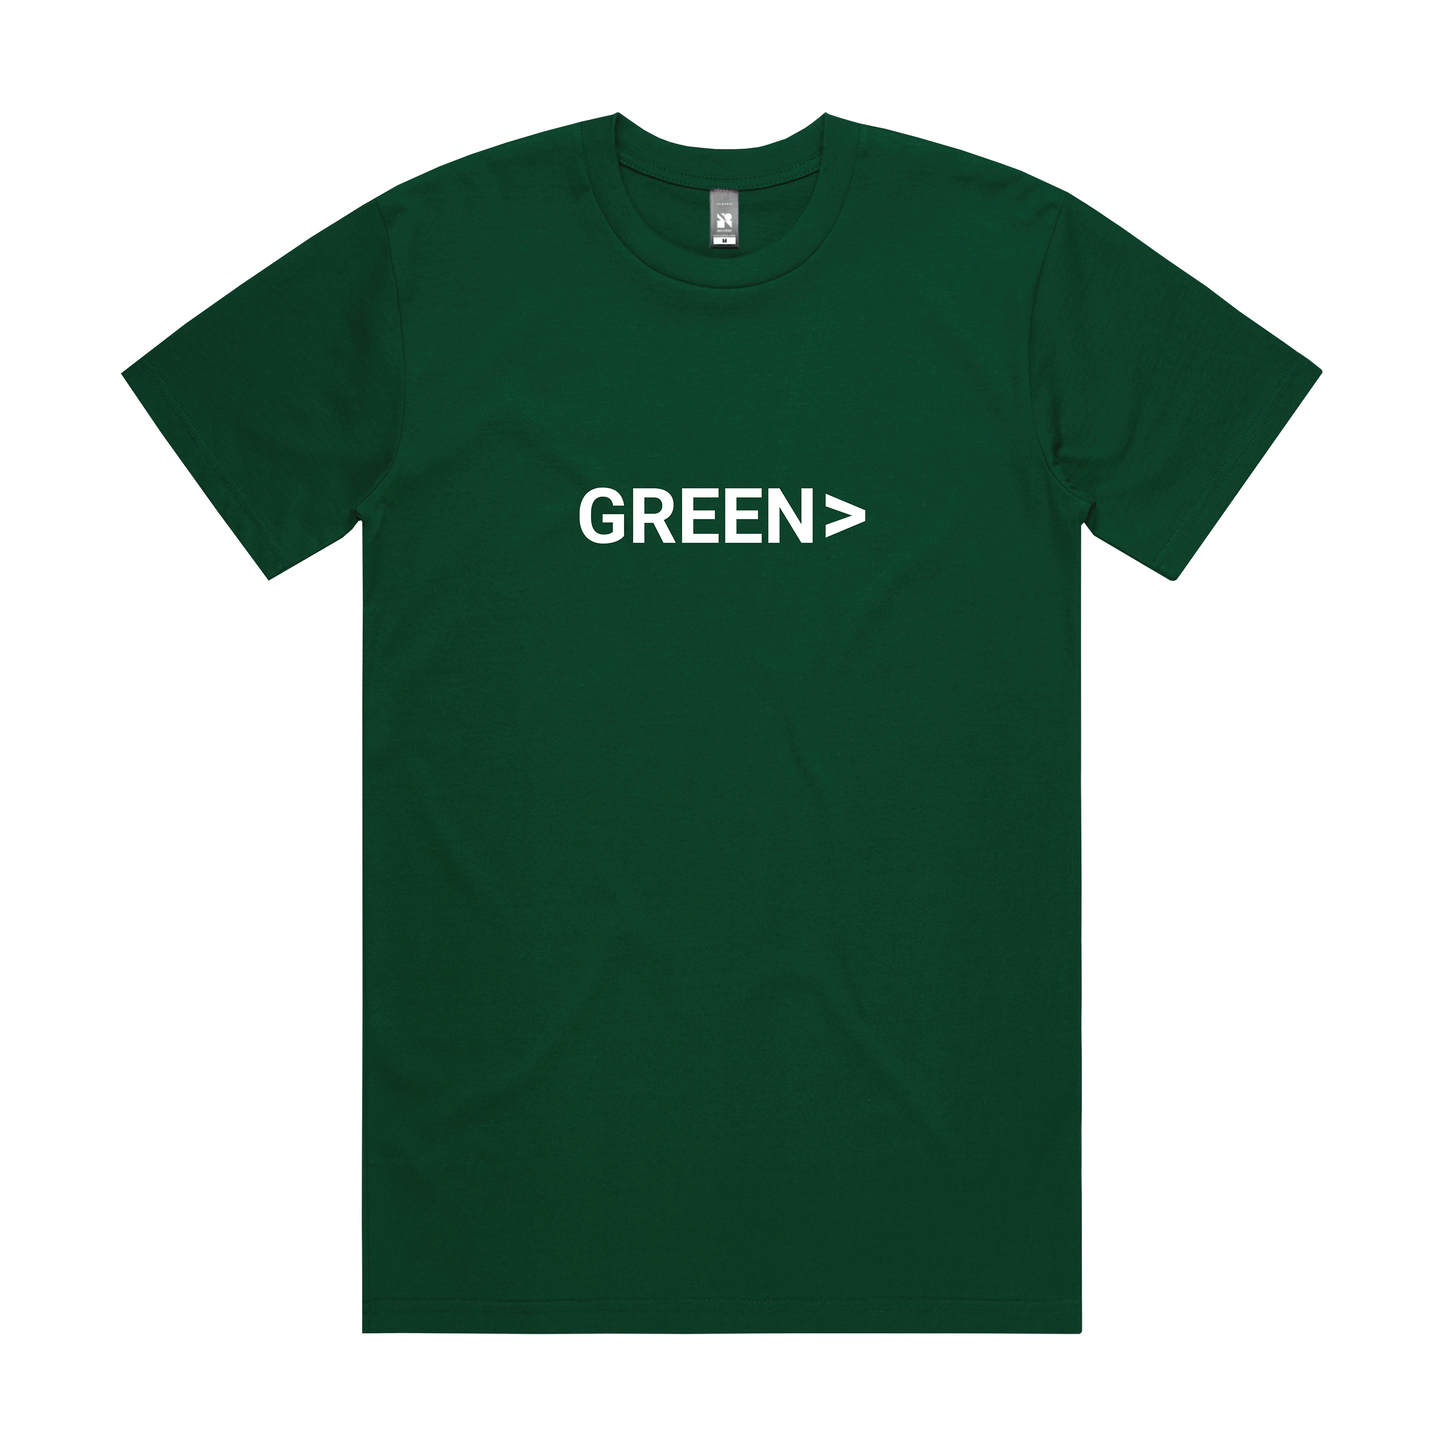 GREEN>